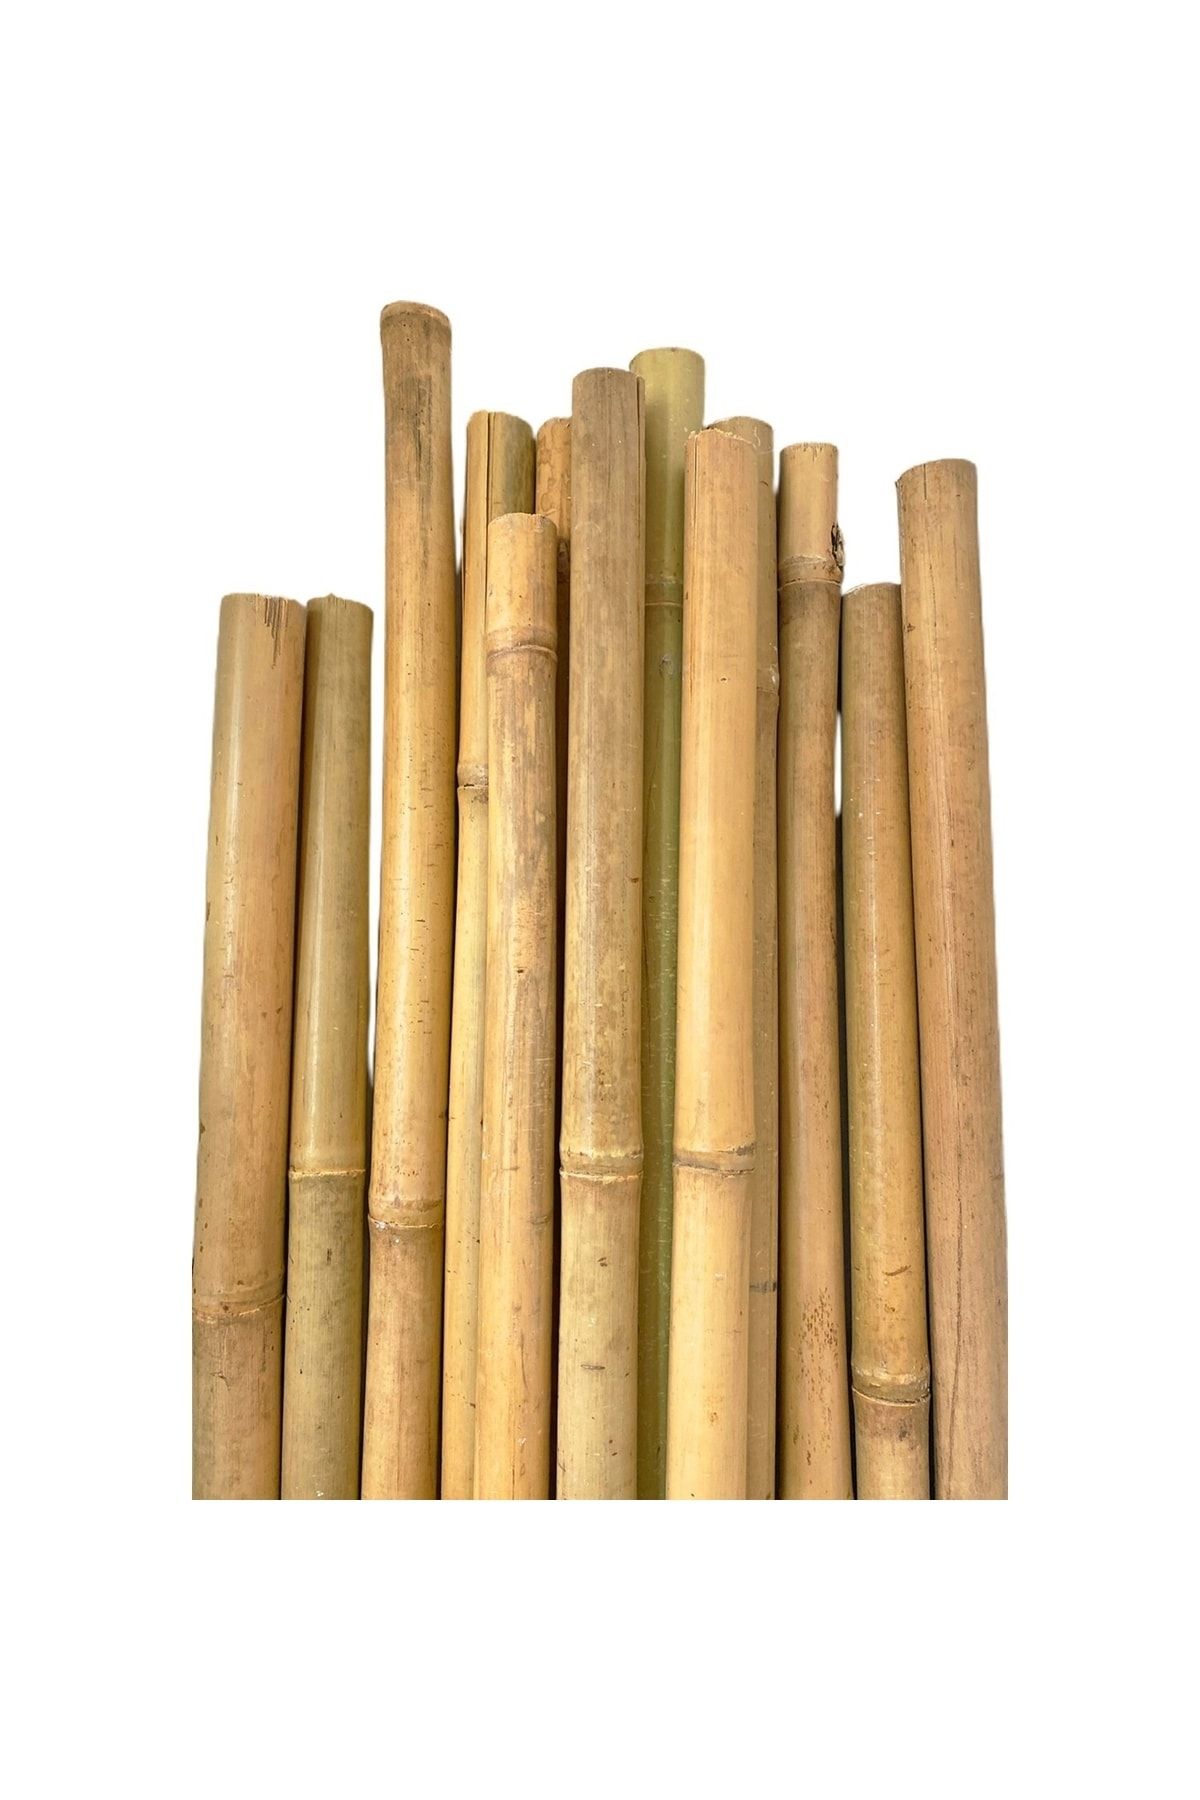 Gardenonya Bambu Bitki Destek Çubuğu 30 Cm (20 Adet) Orjinal Bambu